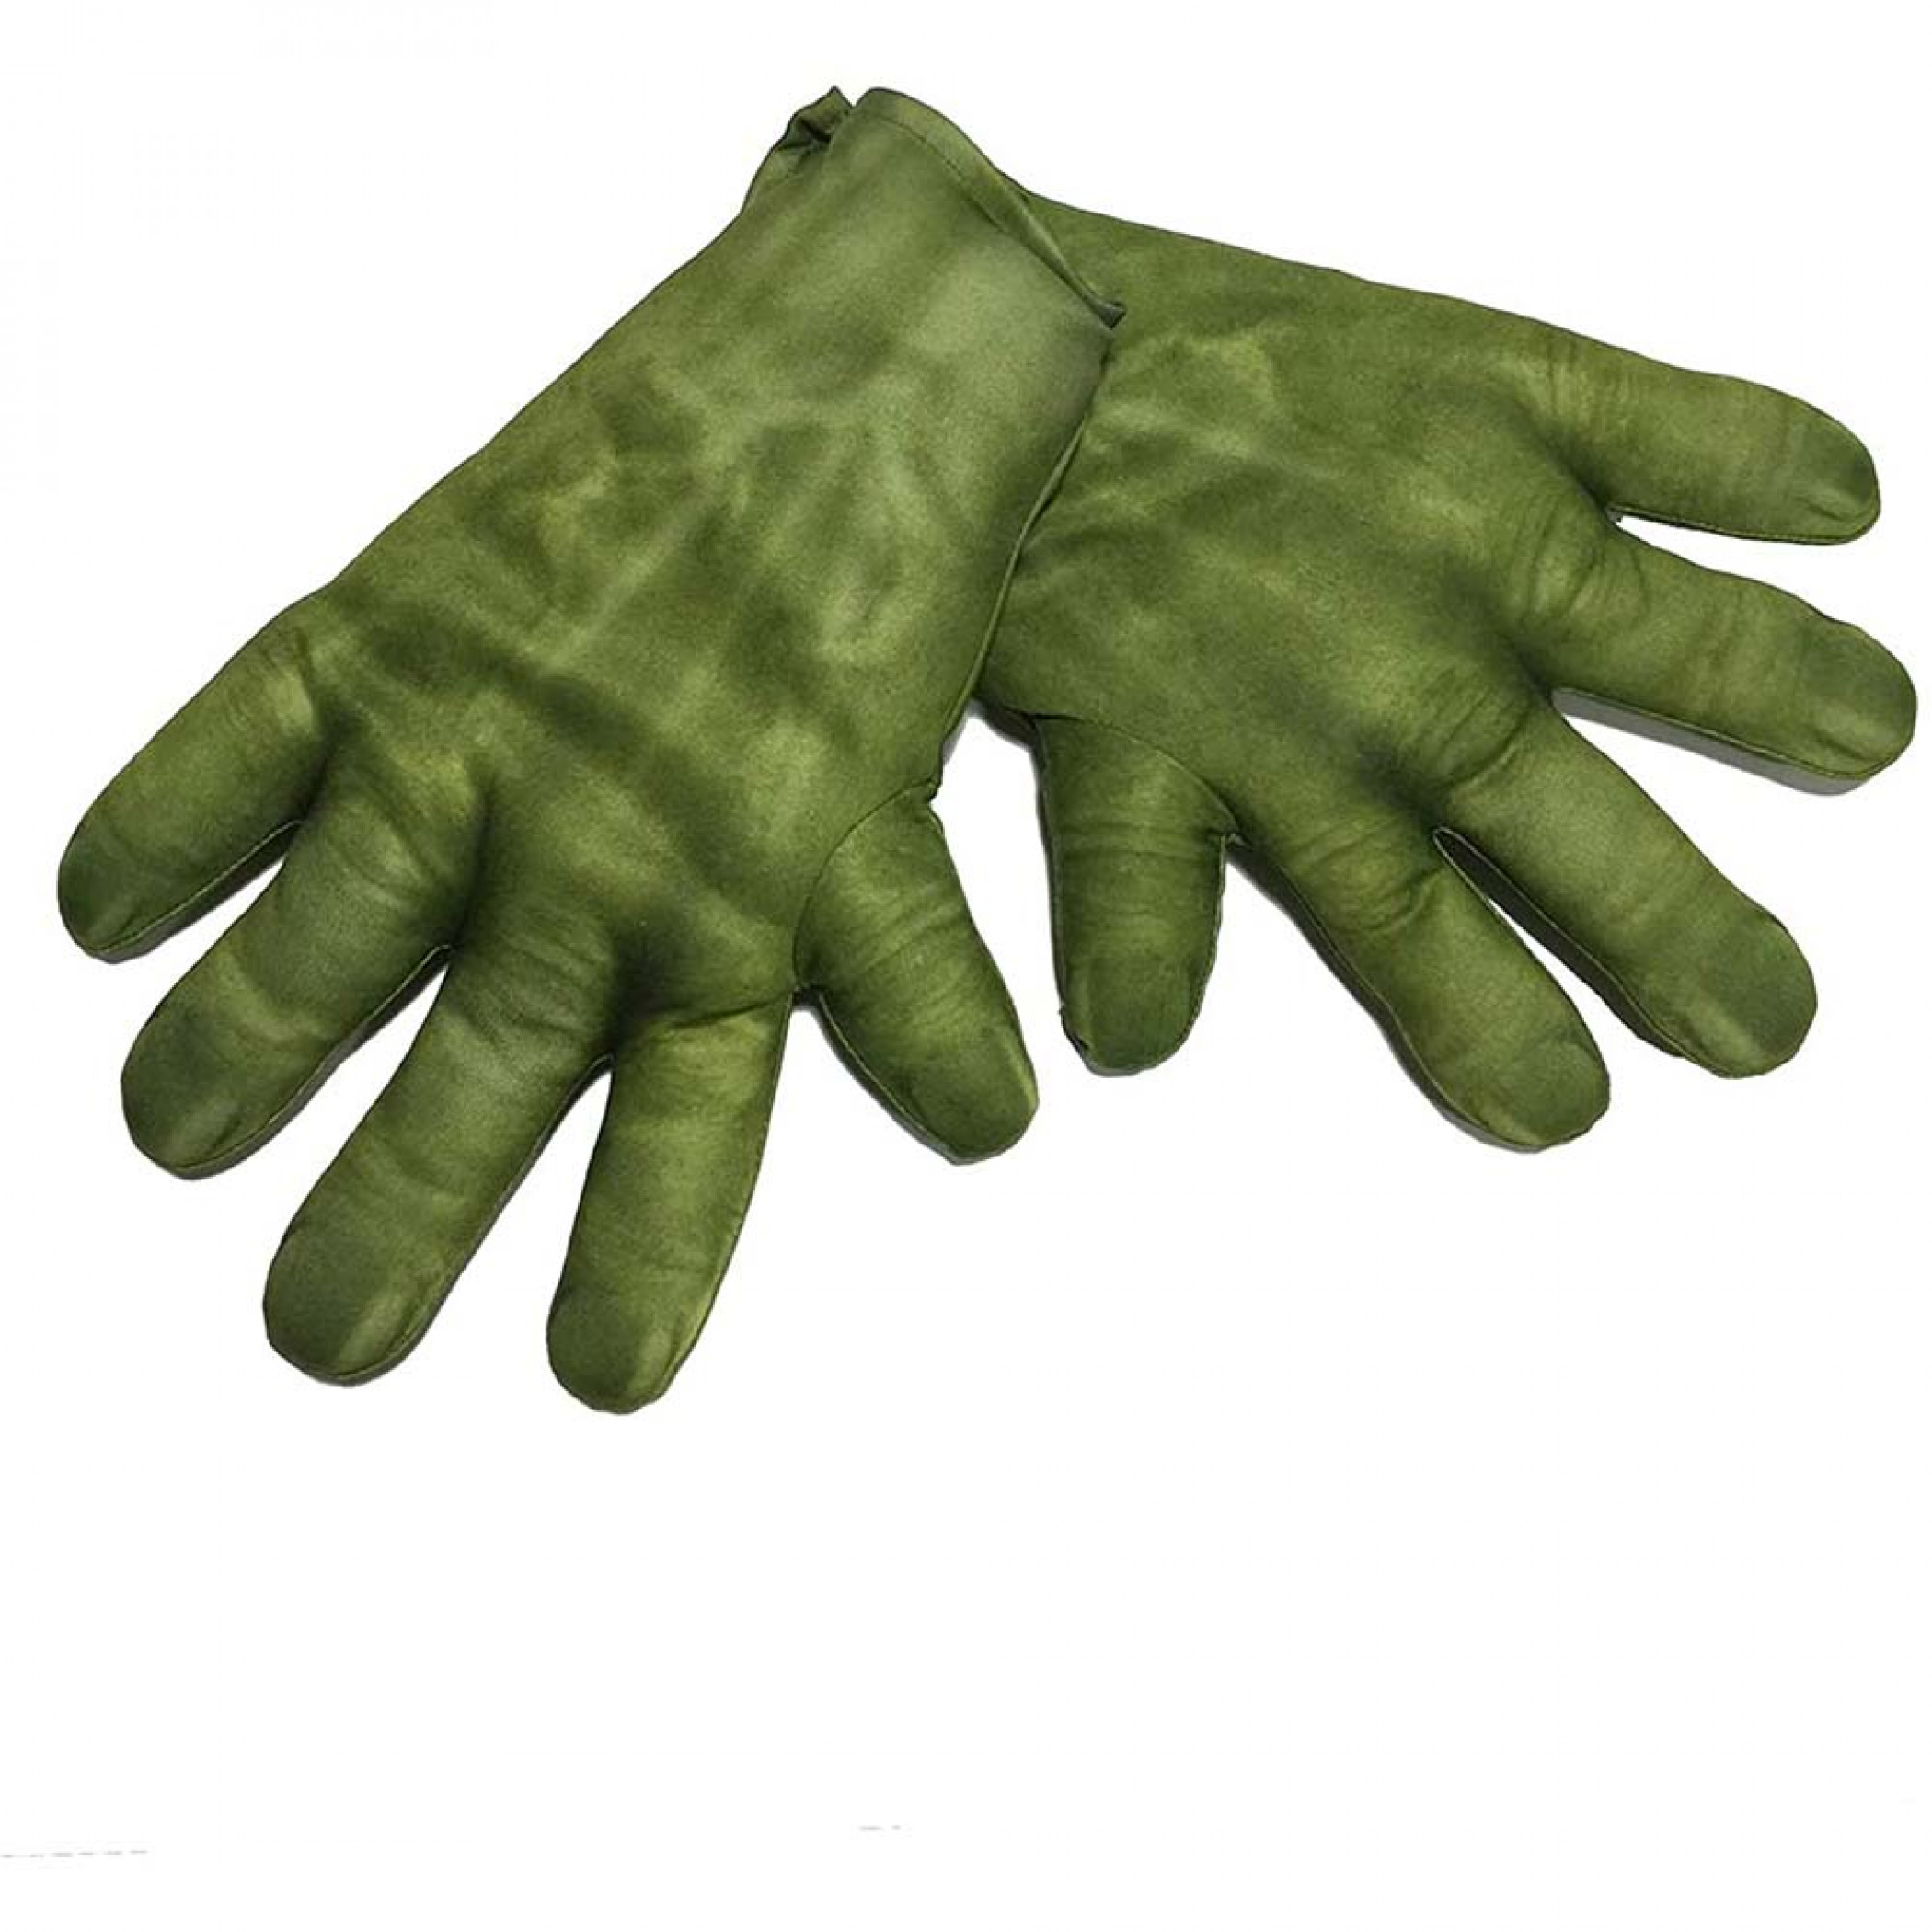 Hulk Padded Child Costume Gloves